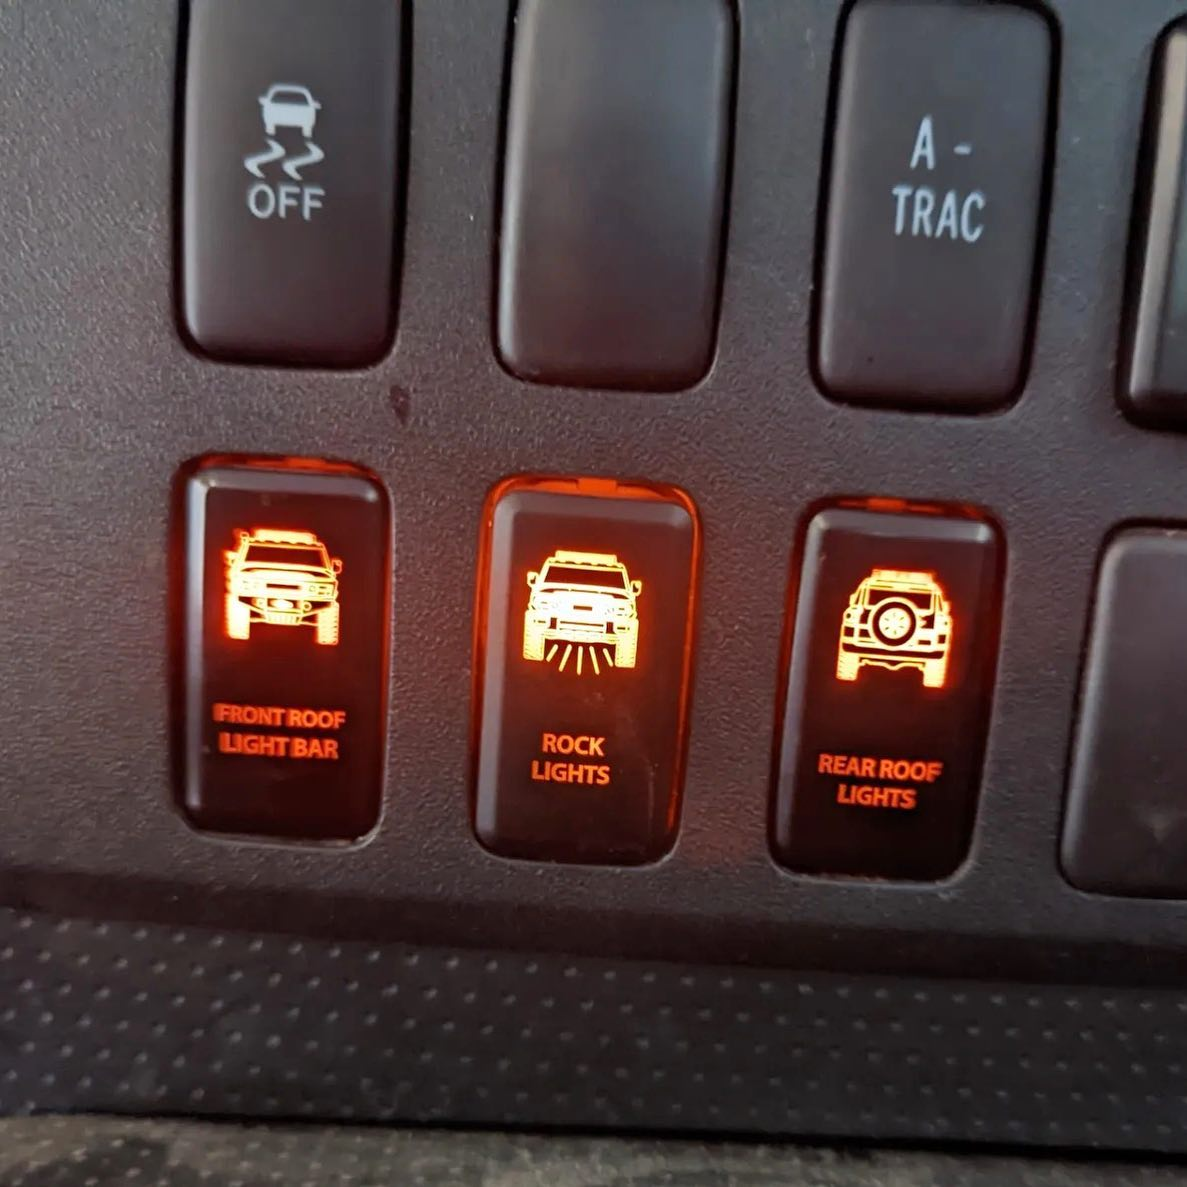 Toyota push switch application